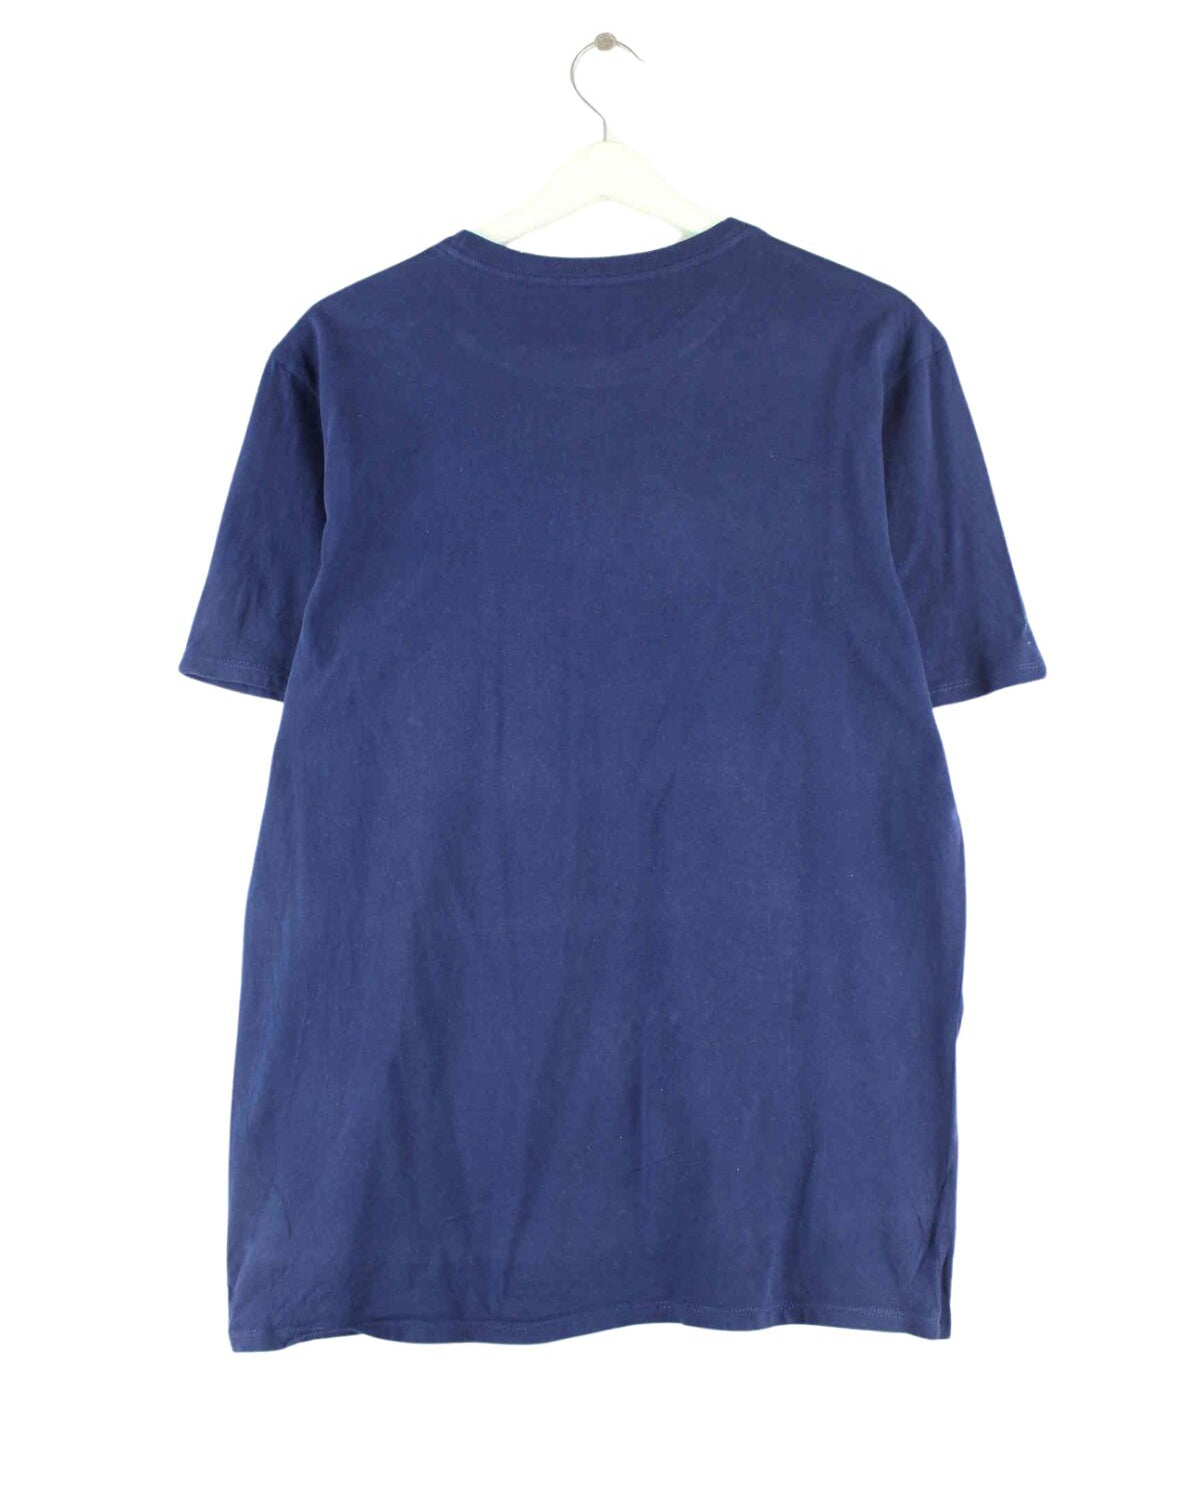 Nike Shoe Box Print T-Shirt Blau M (back image)